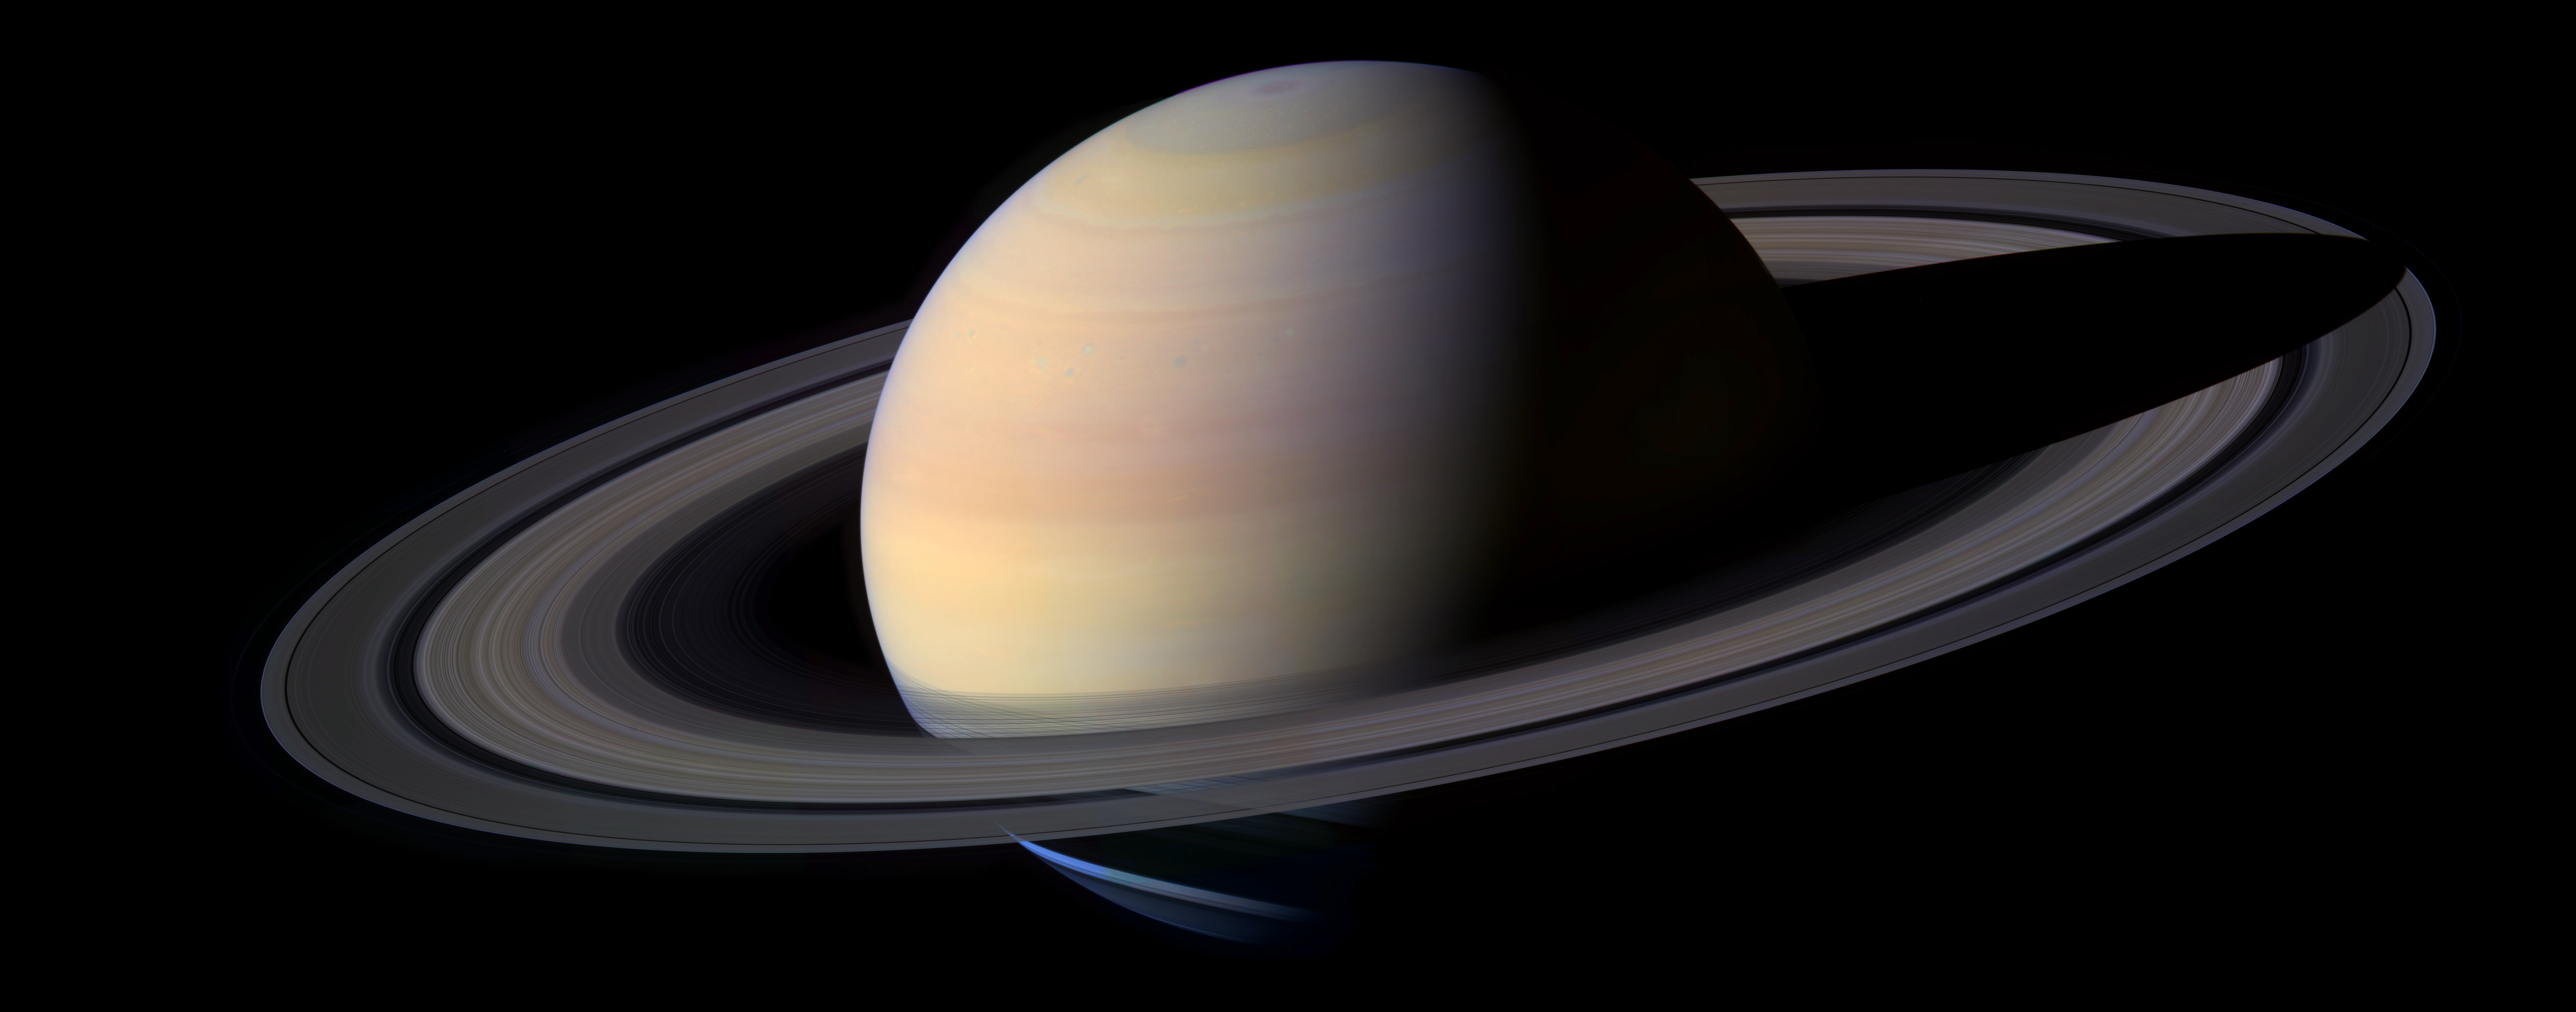 Saturn HD wallpapers, Desktop wallpaper - most viewed